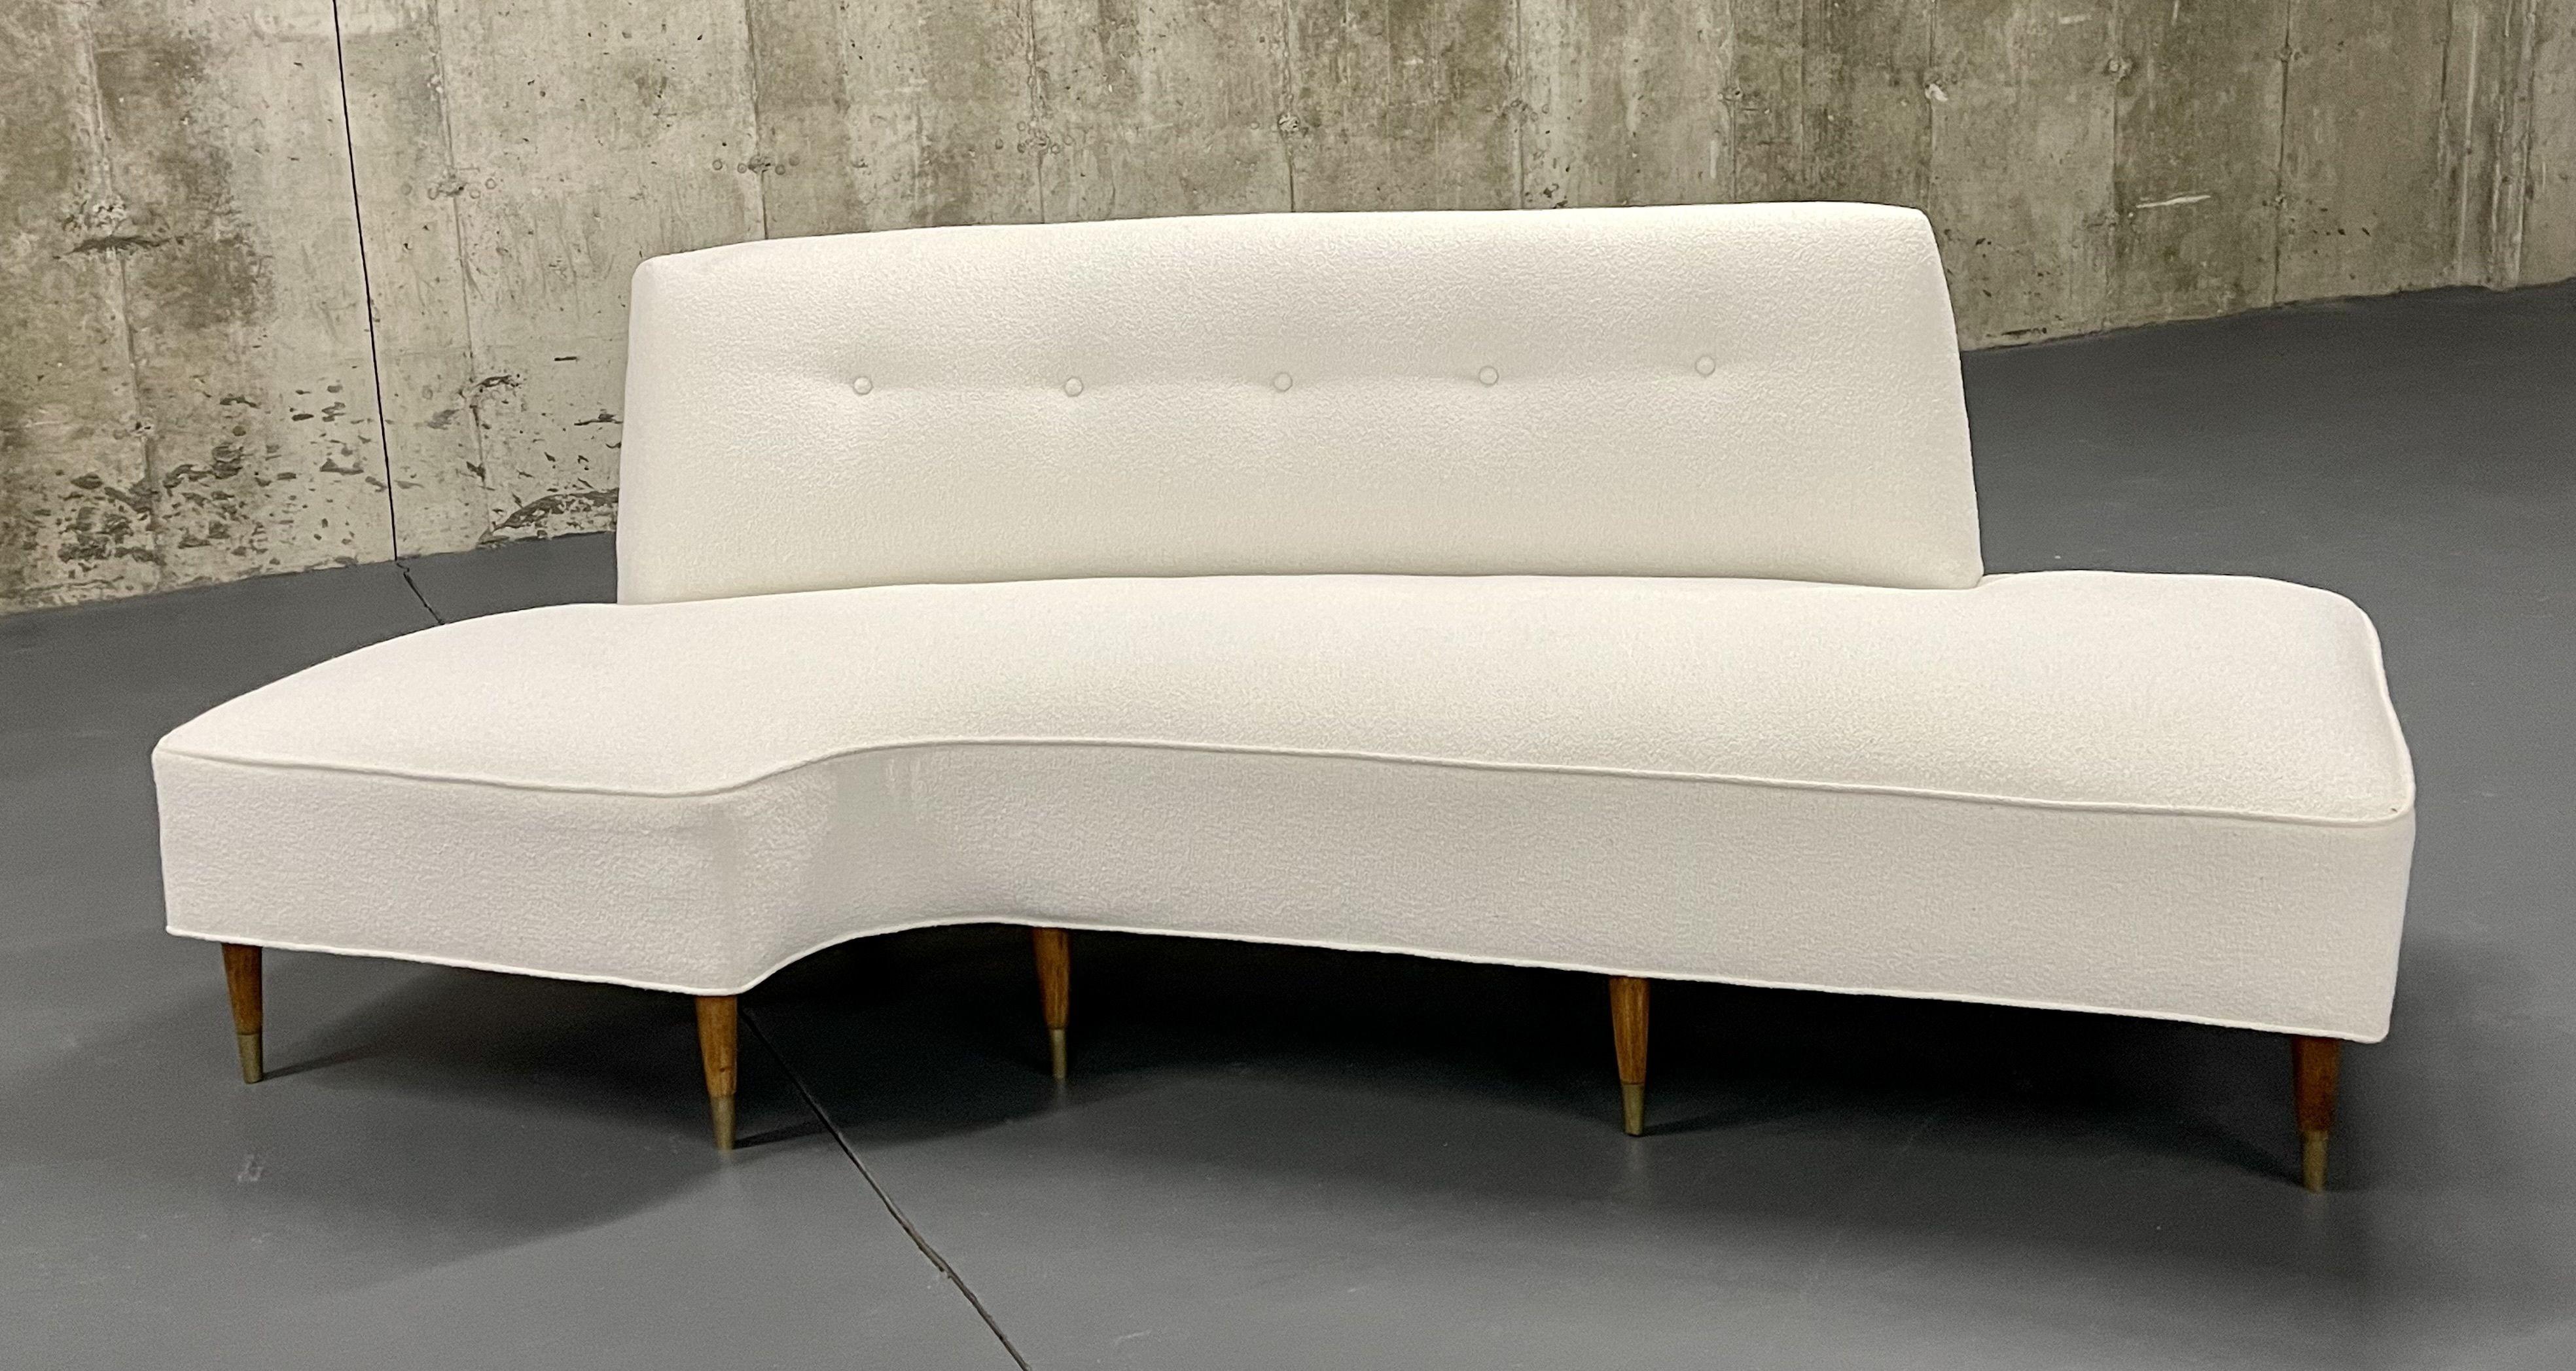 20th Century Mid-Century Modern Italian Designer Corner/Curved Sofa, Chaise Lounge, Bouclé